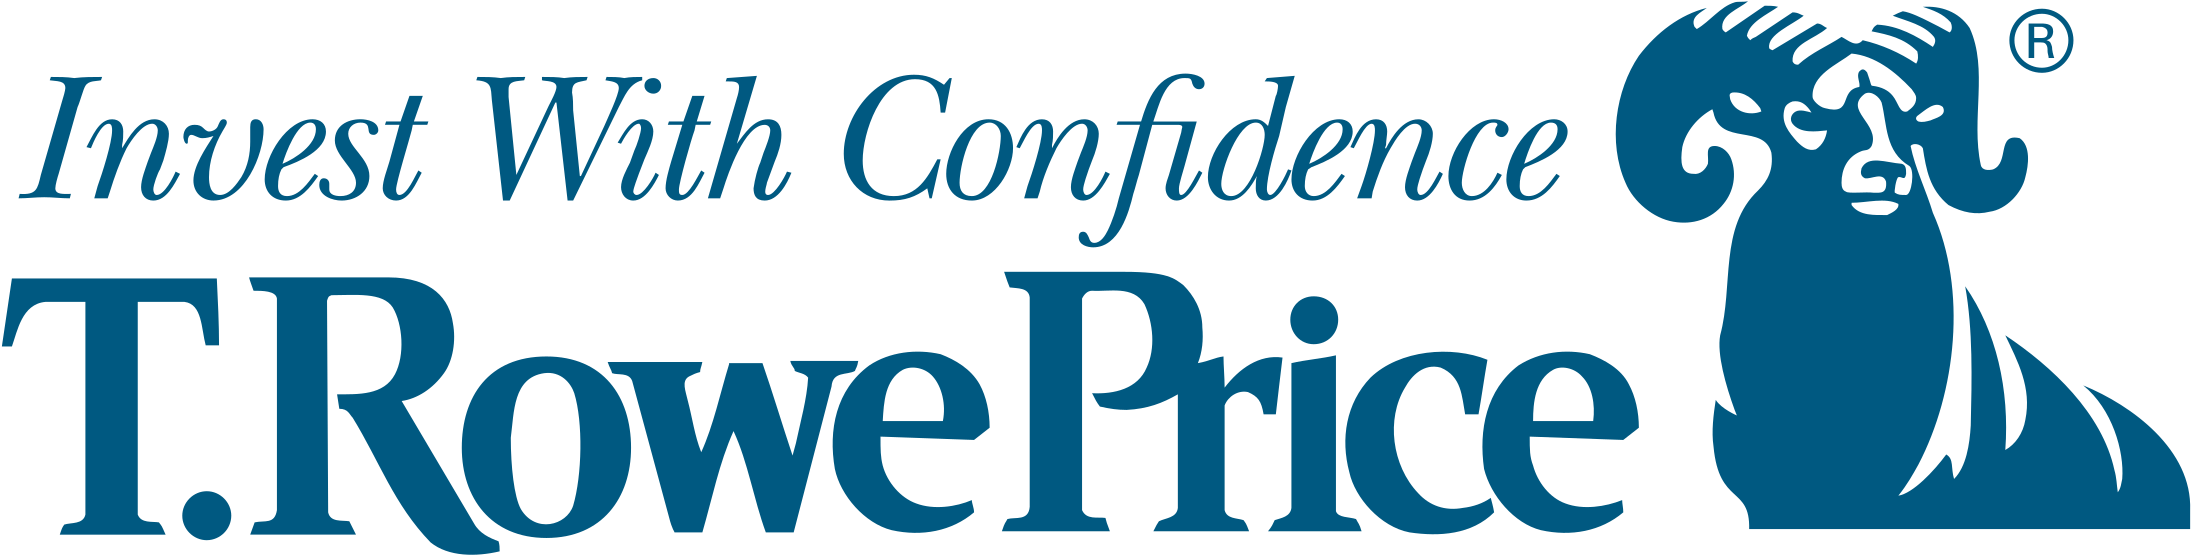 T.Rowe Price Logo